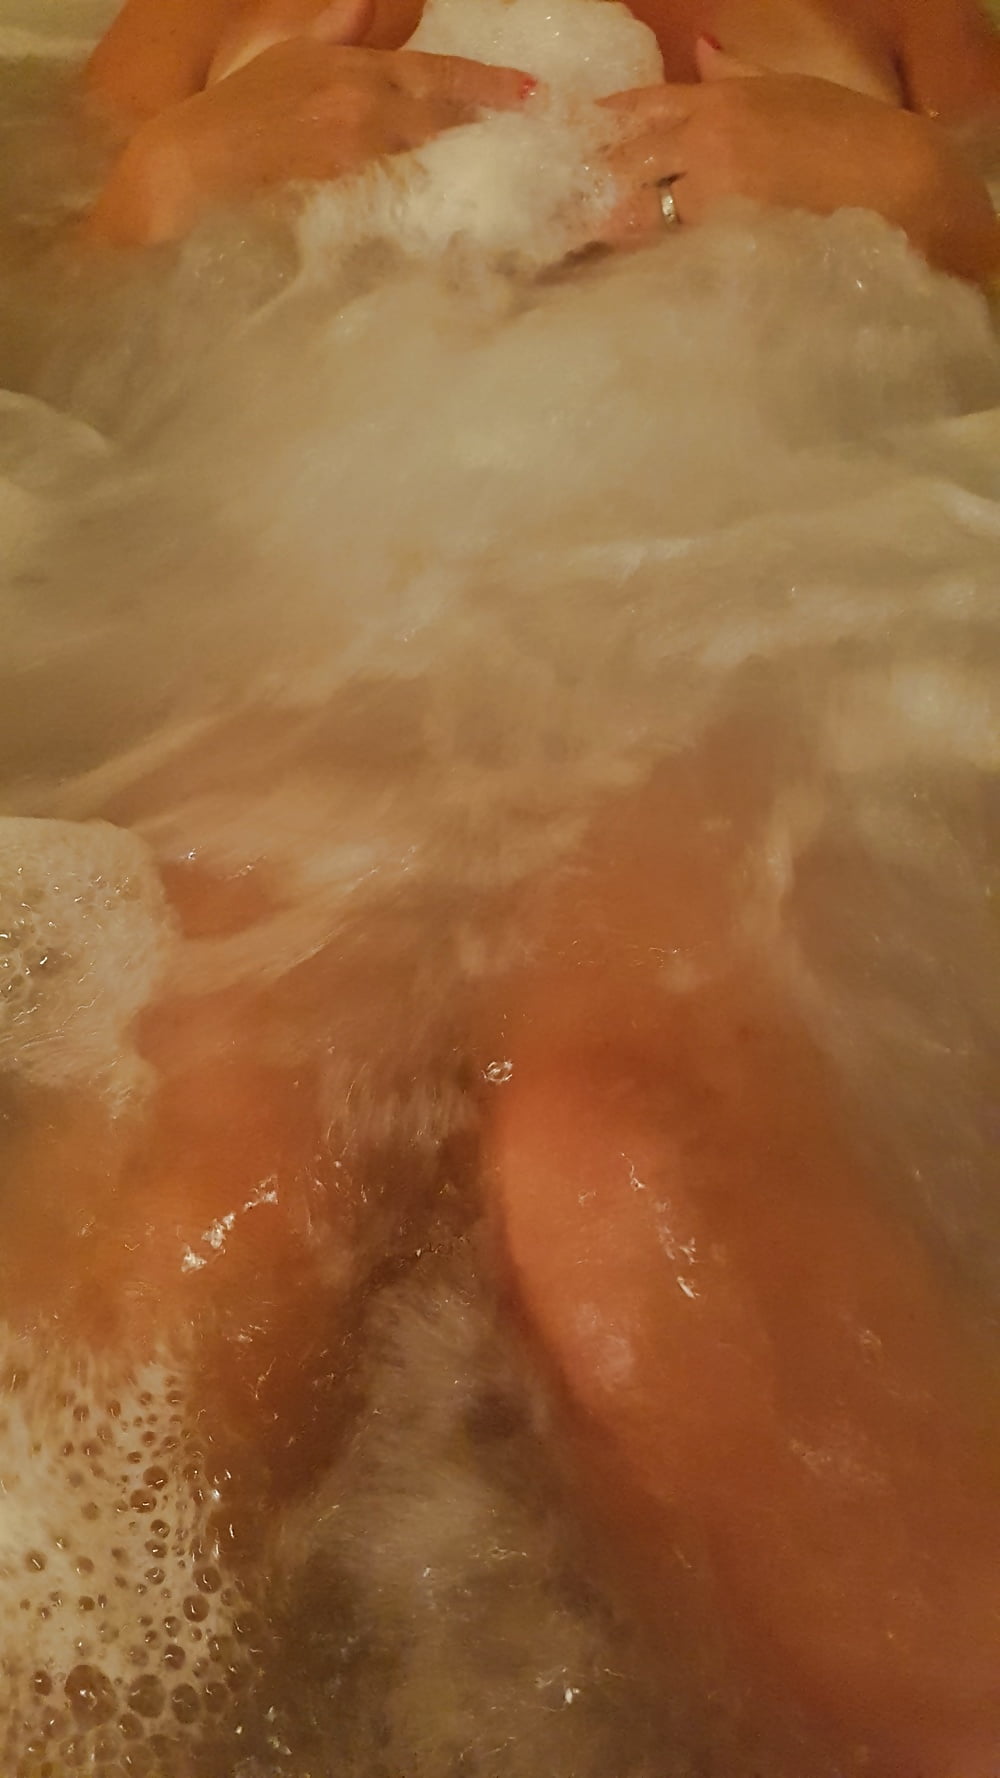 Tub tits hot 